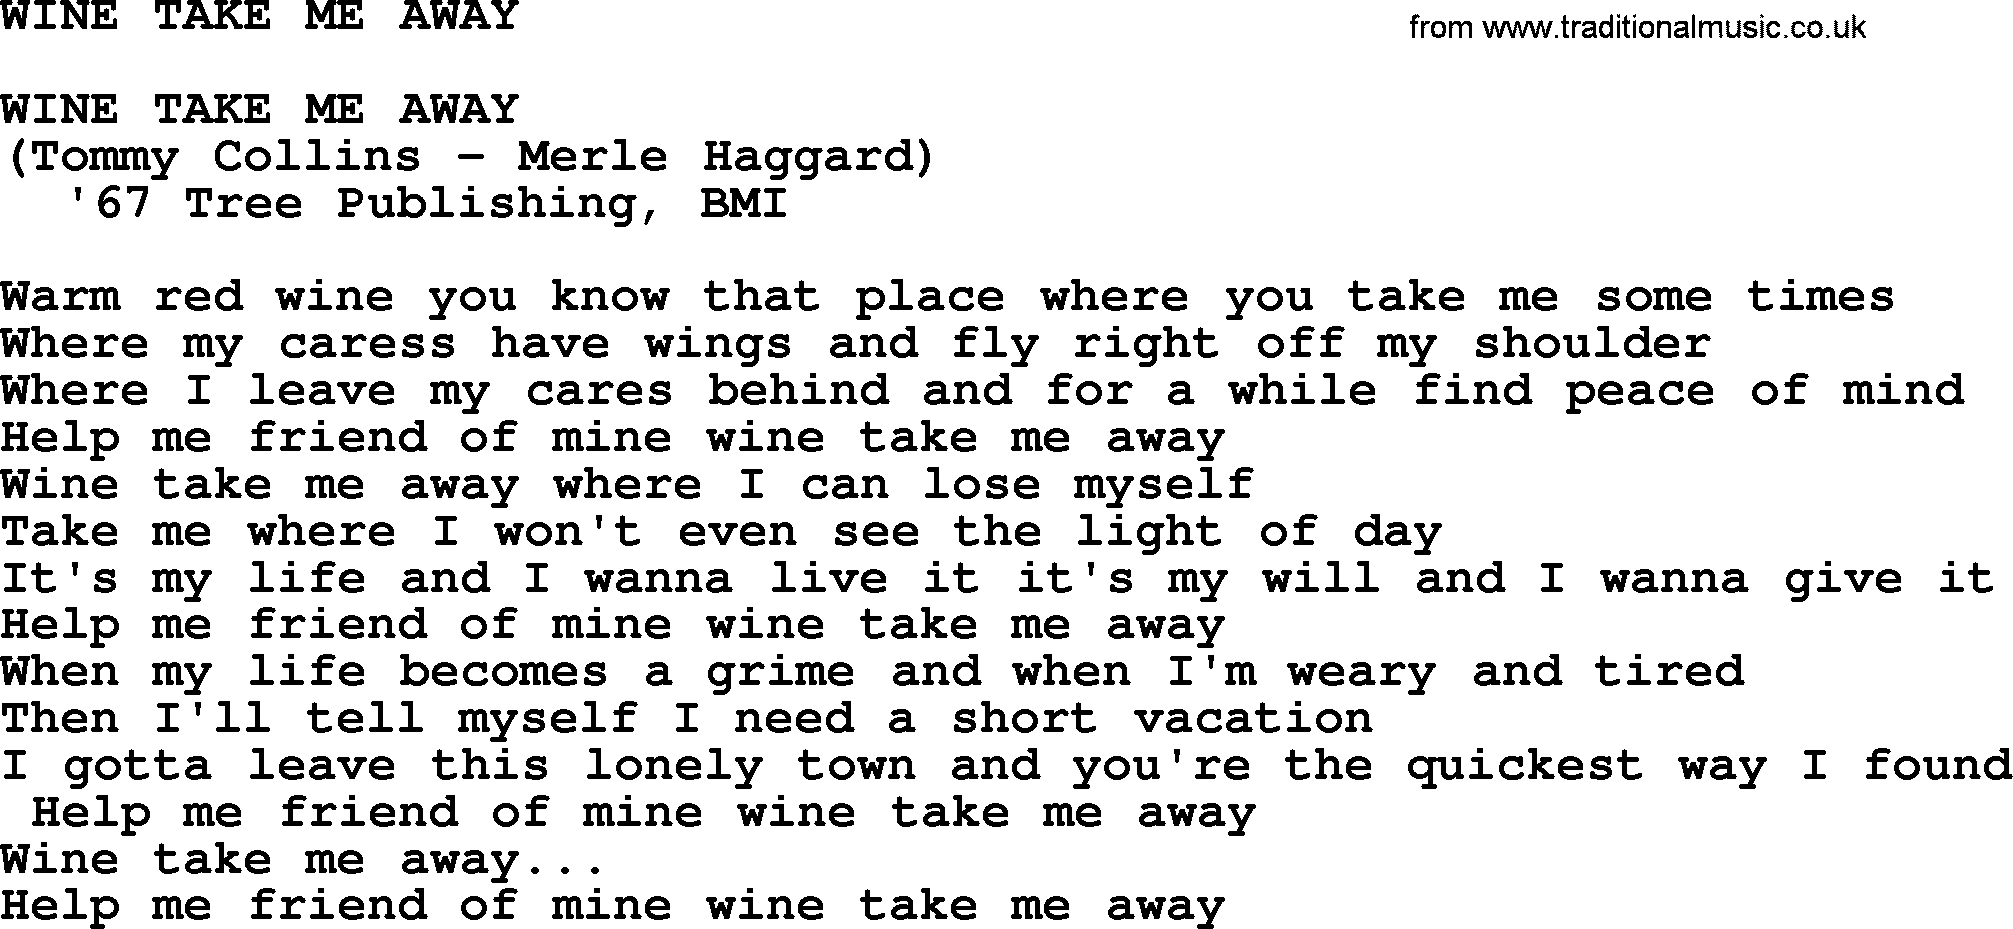 Merle Haggard song: Wine Take Me Away, lyrics.